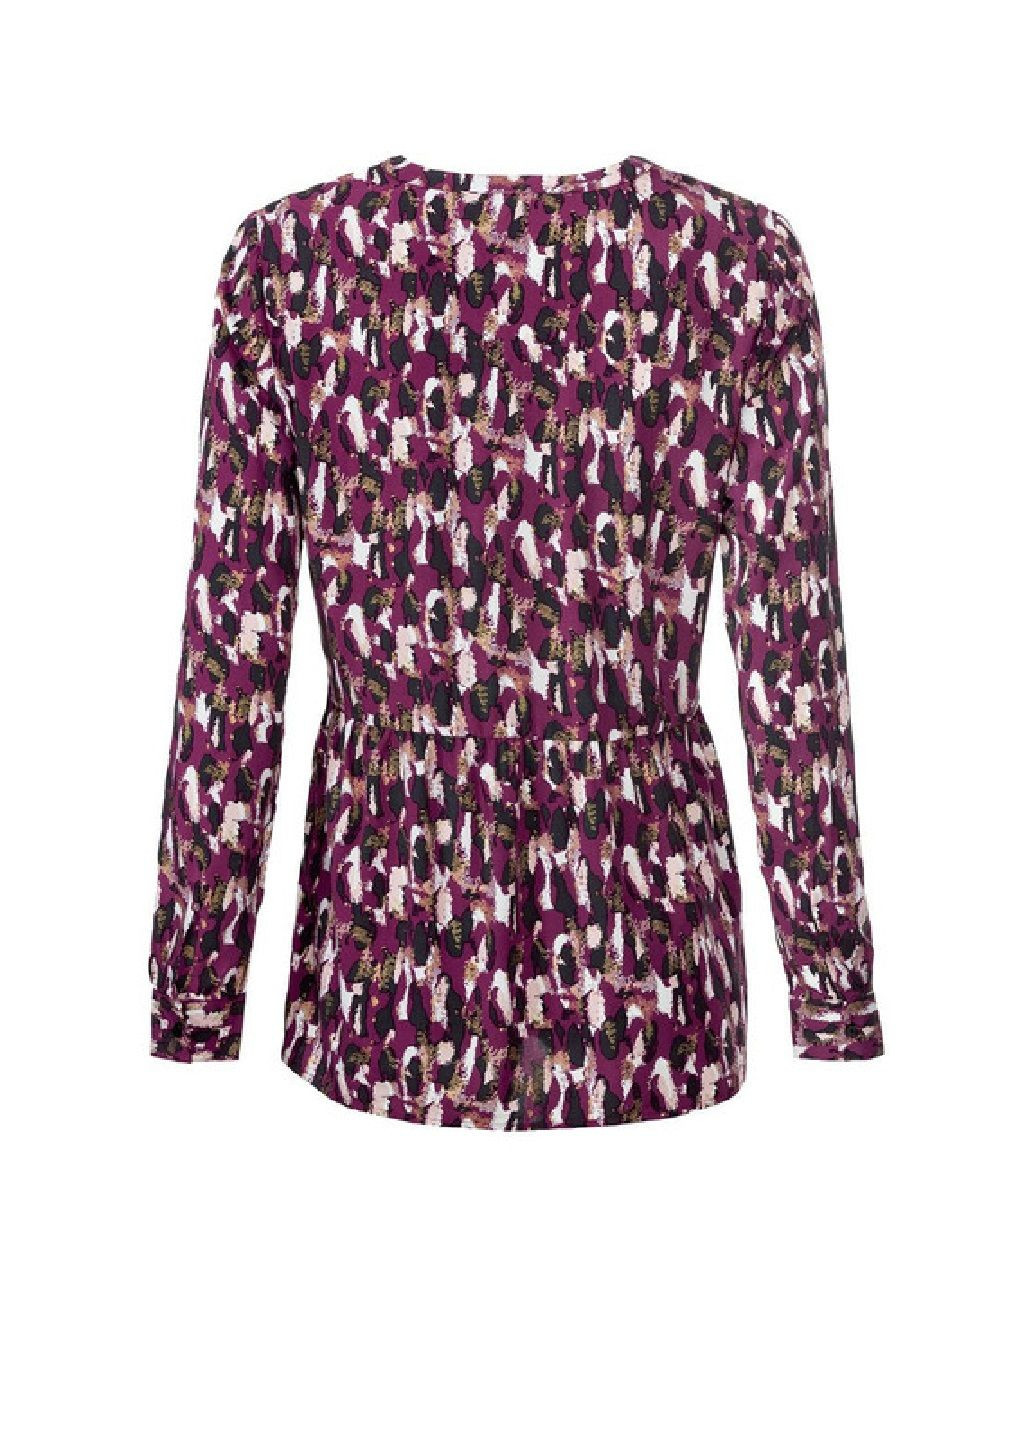 Фіолетова демісезонна блузка Esmara